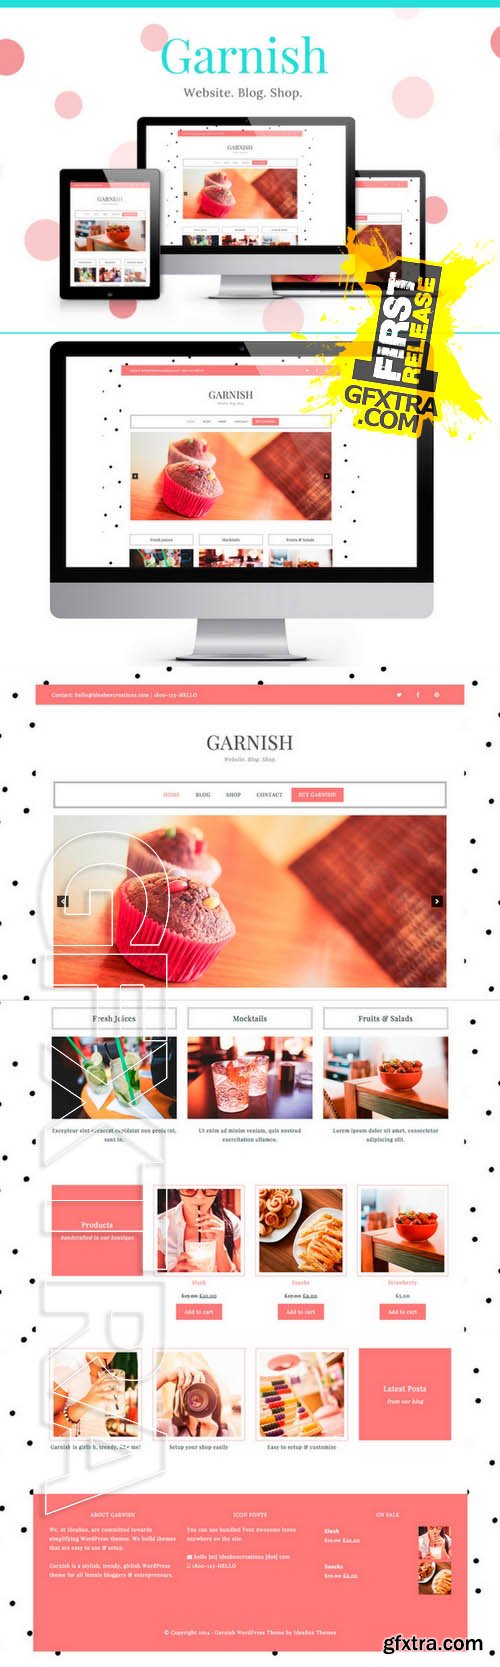 Garnish - WordPress Theme - Creativemarket 123213